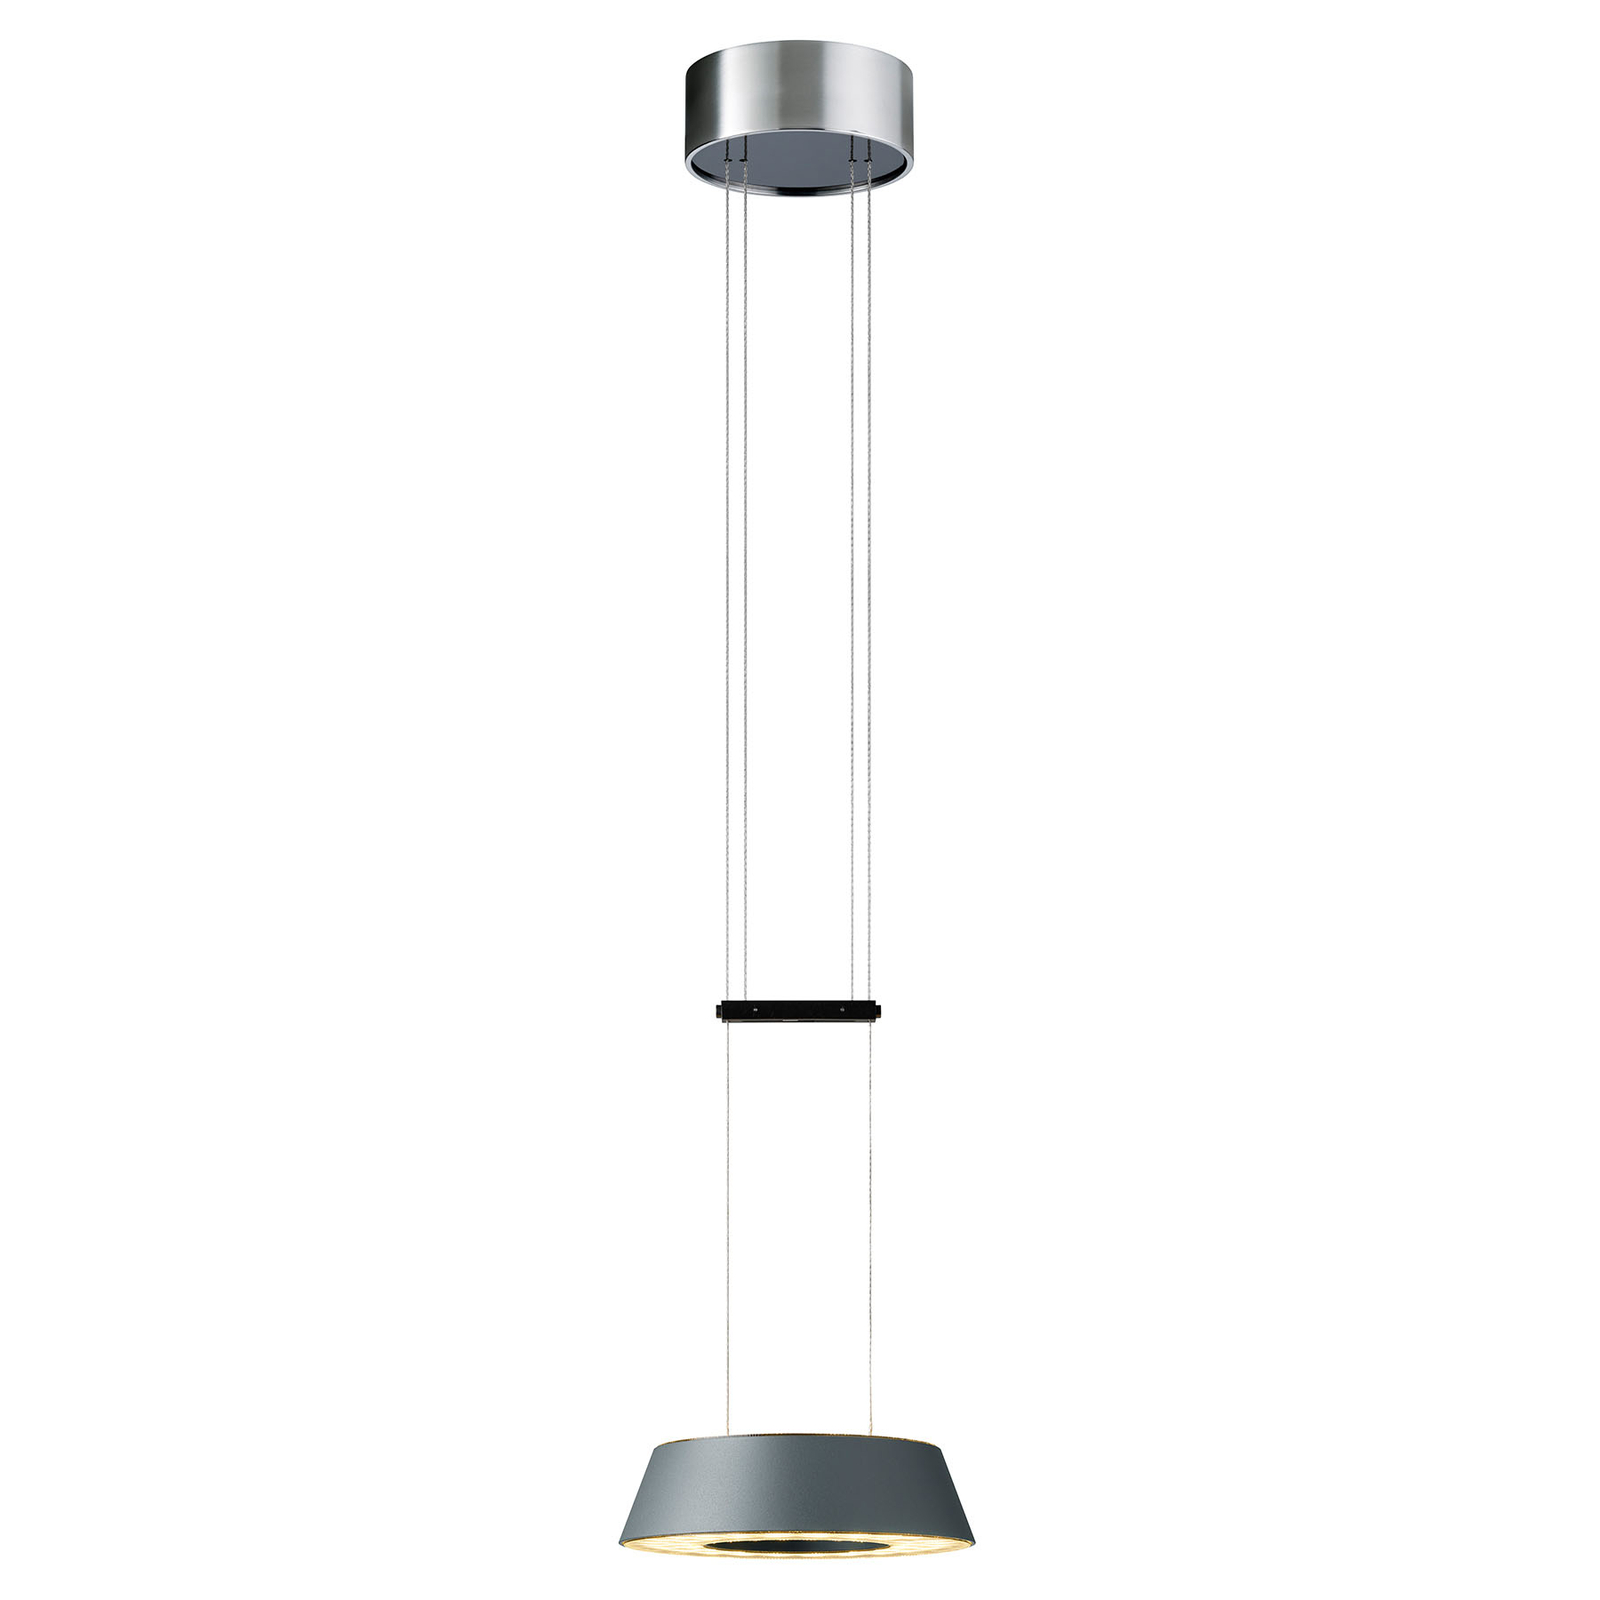 OLIGO Glance LED-riippuvalo, 1 lamp. harmaa